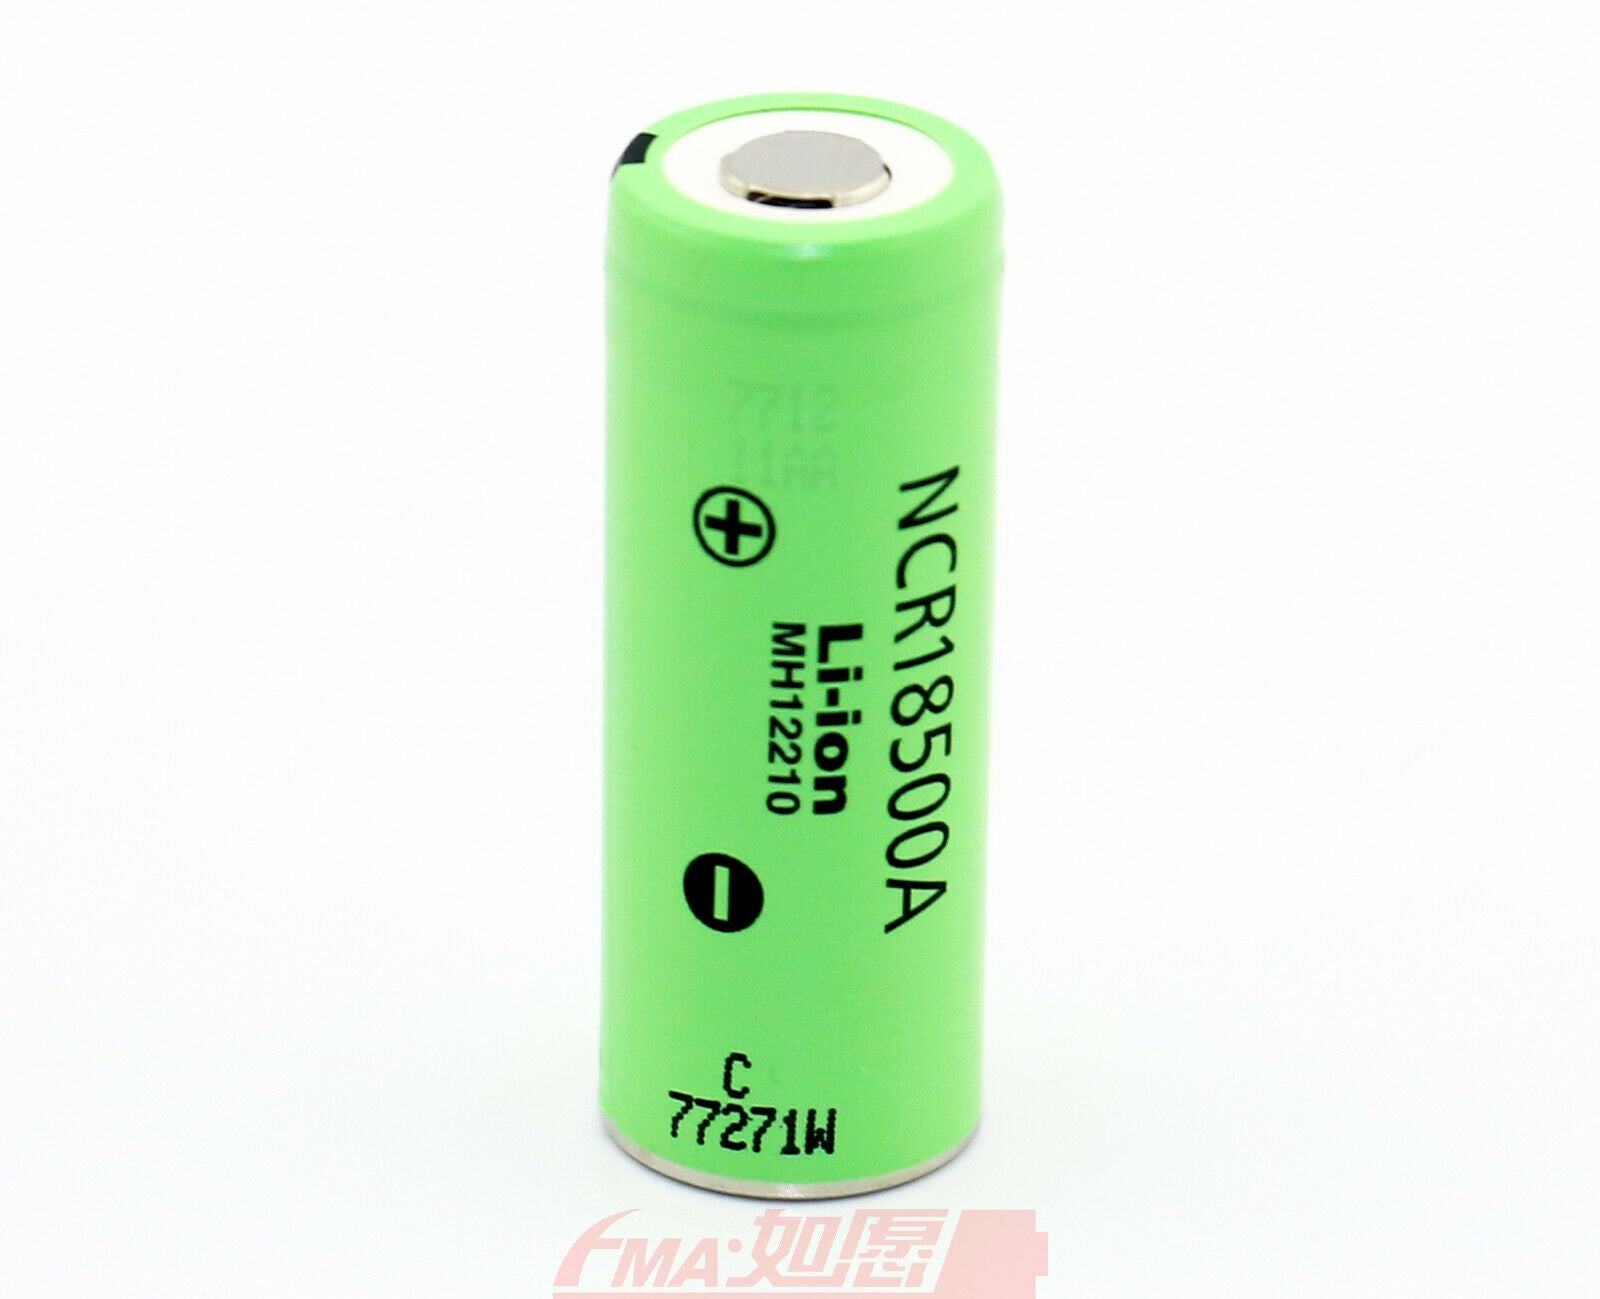 2x Flashlight Camera EOS 18490 18500 Li-ion Battery 3.6V 2040mAh by Japan cell